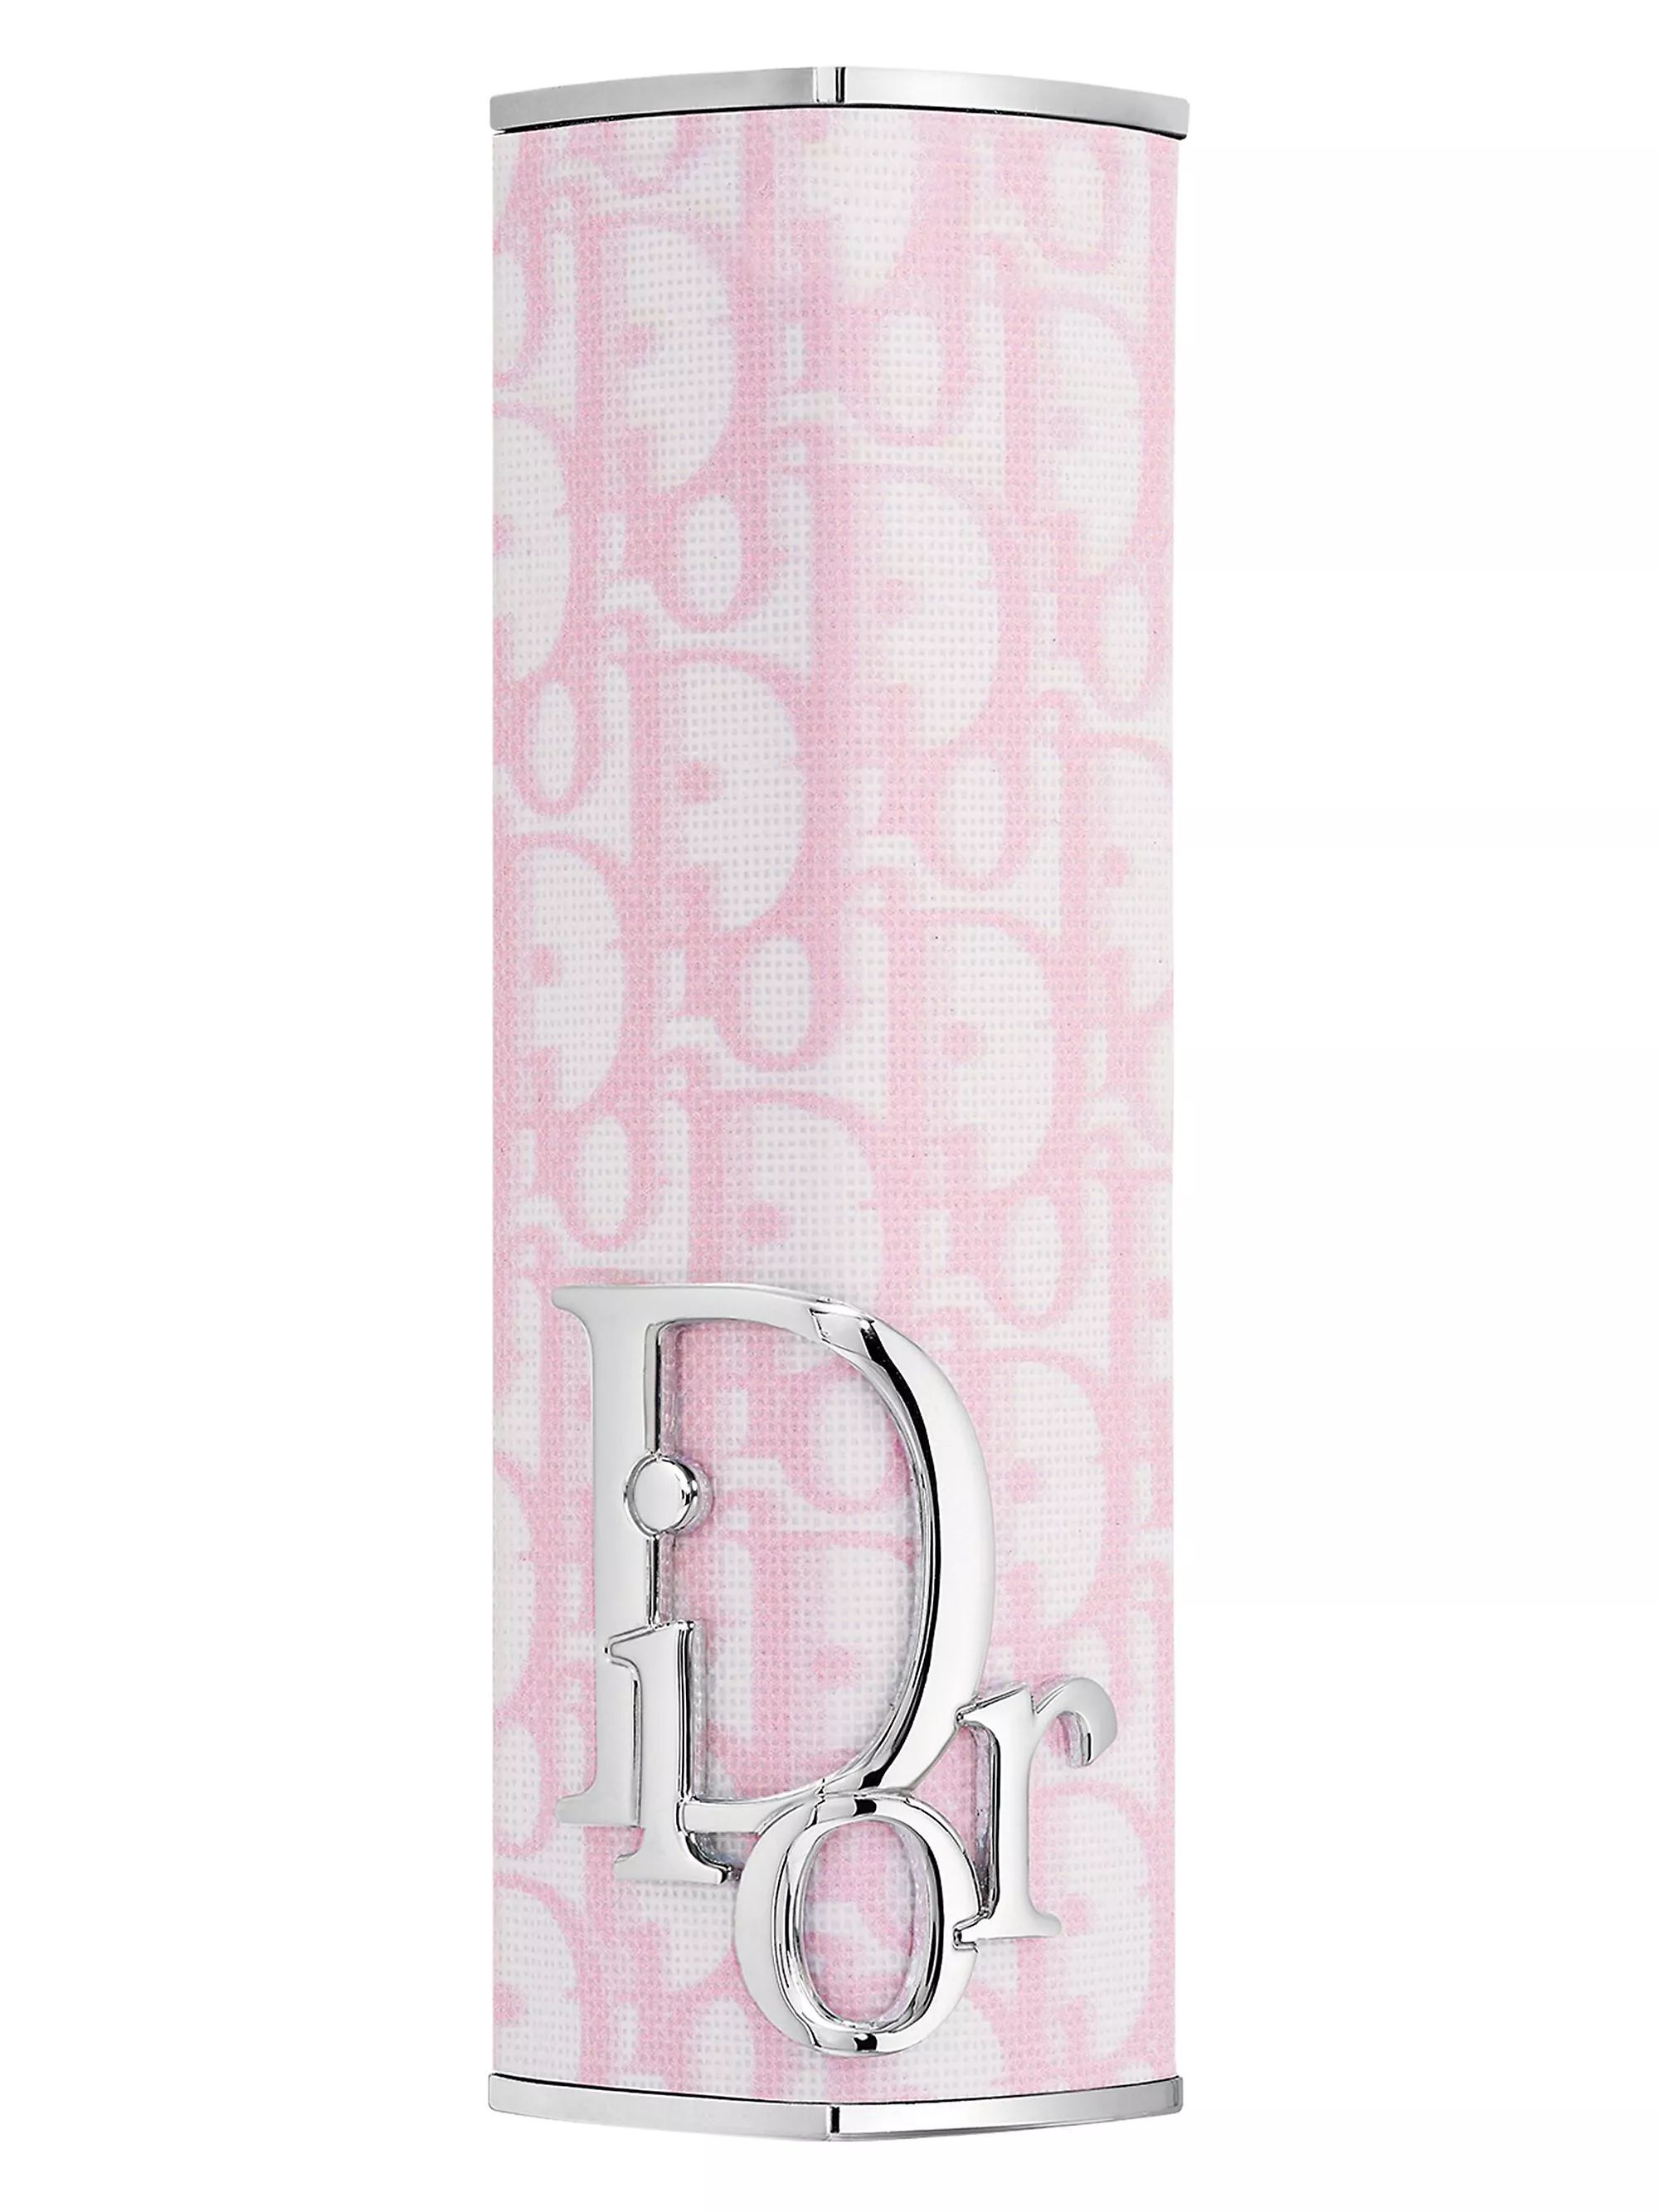 Limited-Edition Dior Addict Shine Refillable Lipstick Couture Case | Saks Fifth Avenue